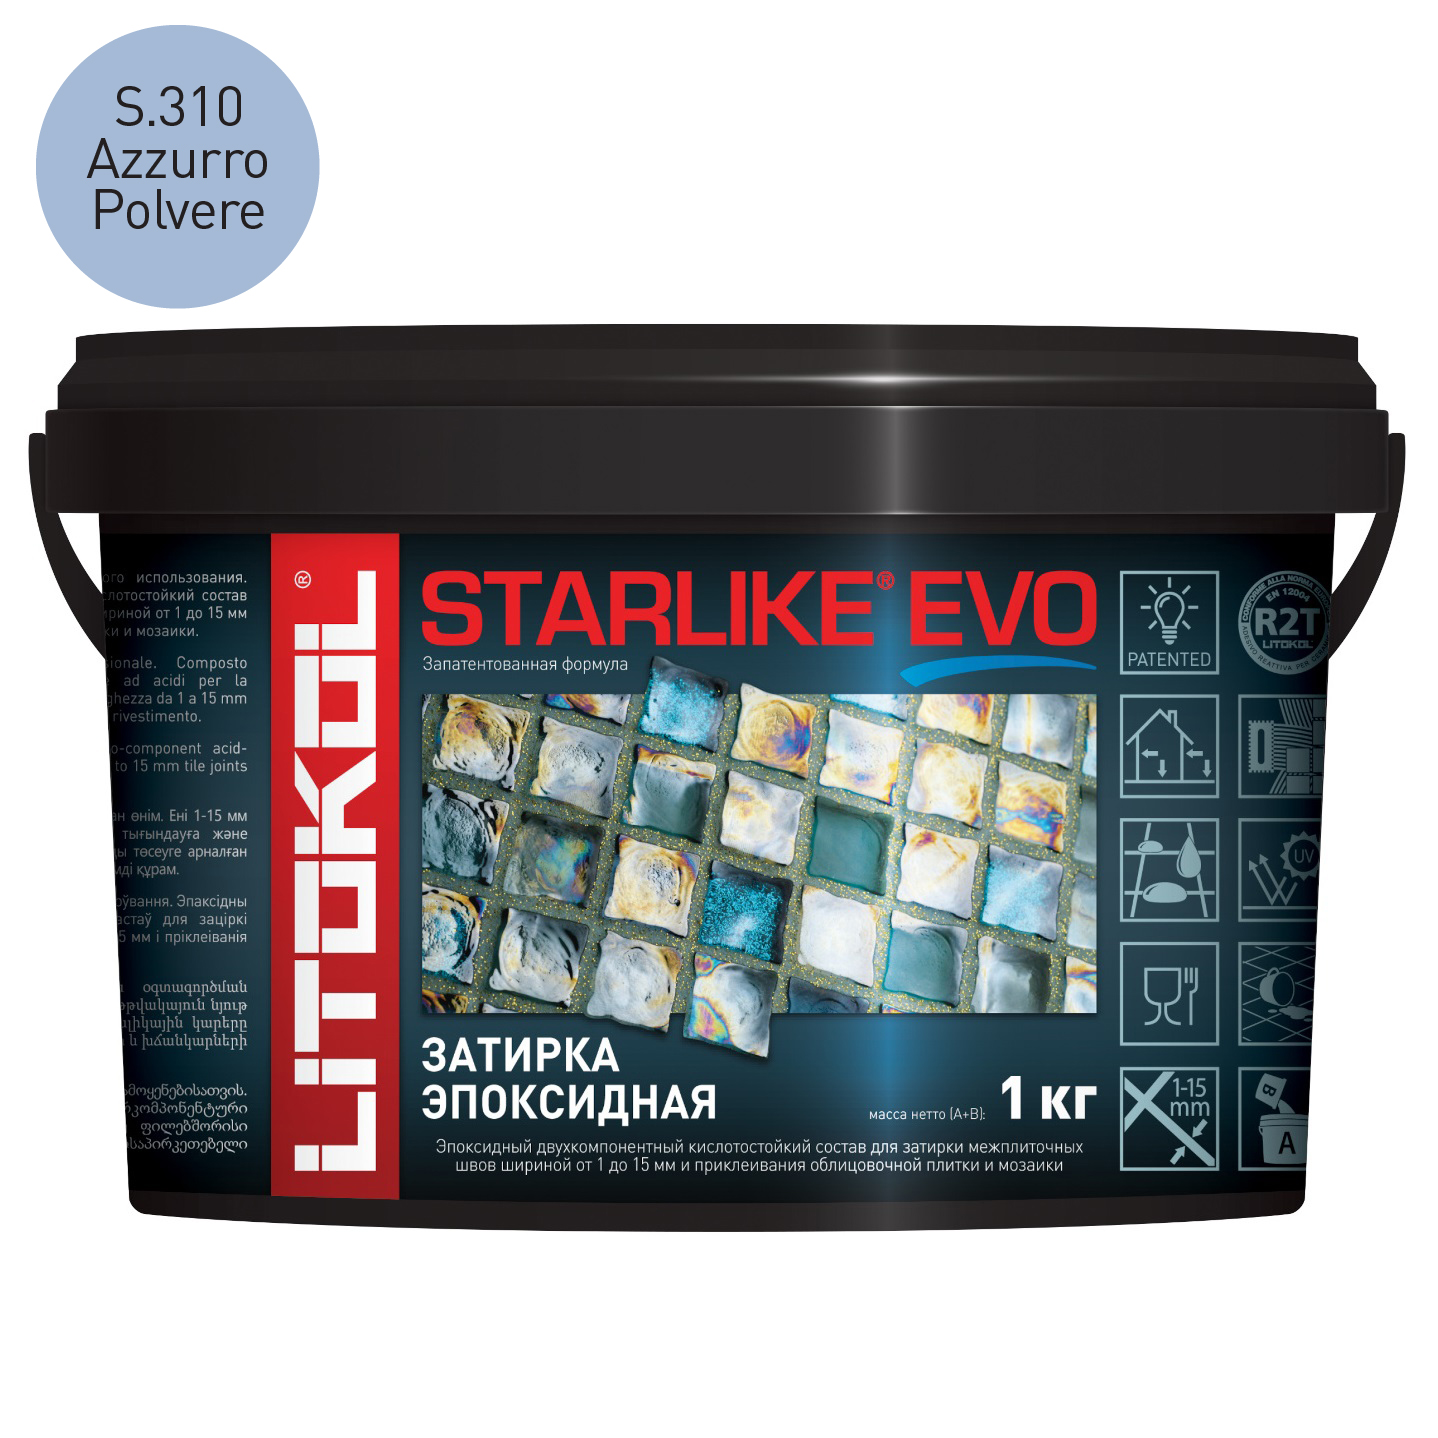 Затирка эпоксидная Litokol Starlike Evo S.310 Azzurro Polvere (1 кг.)